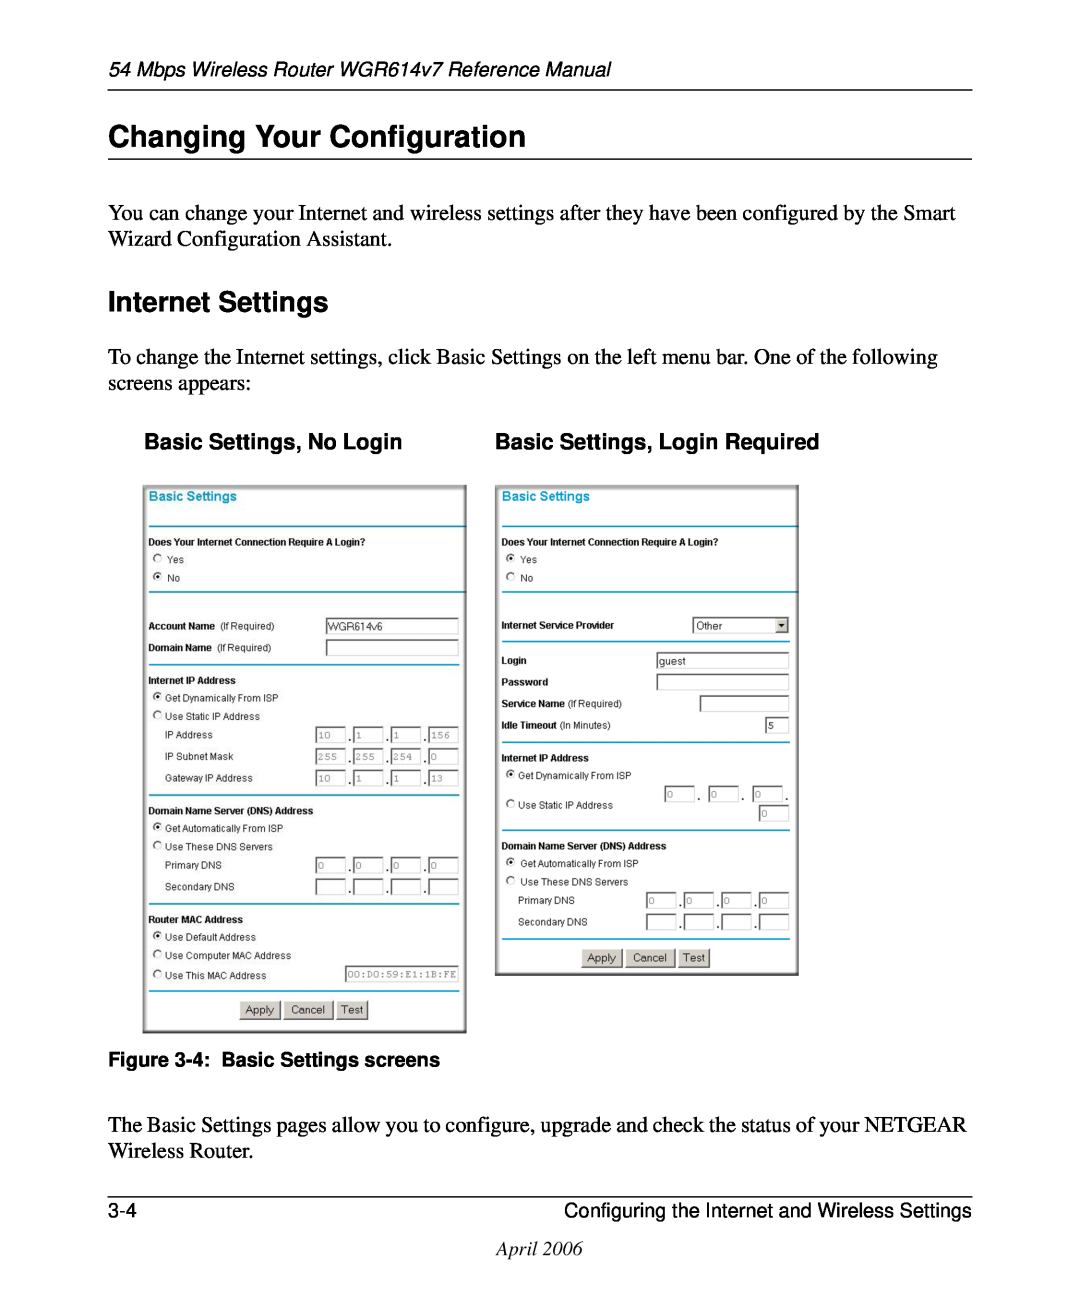 NETGEAR WGR614v7 manual Changing Your Configuration, Internet Settings, Basic Settings, No Login 